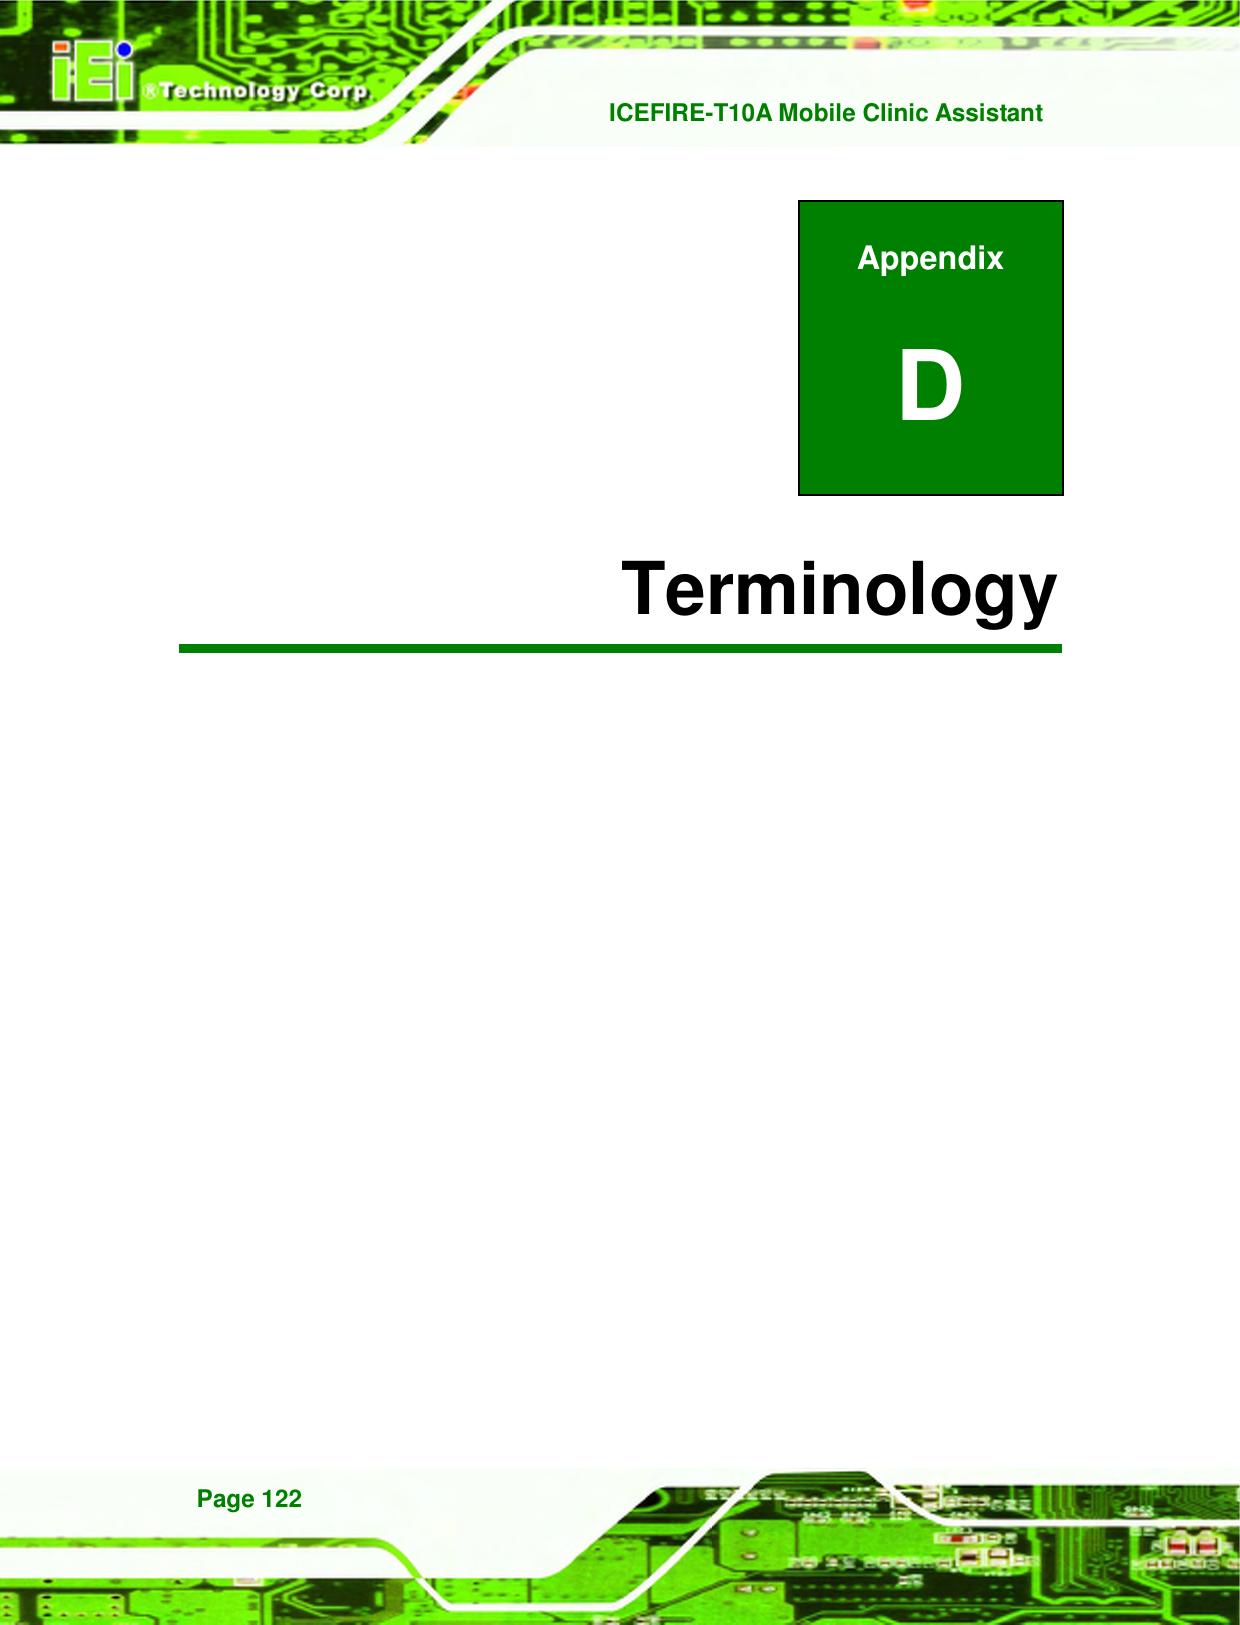   ICEFIRE-T10A Mobile Clinic Assistant Page 122 Appendix D D Terminology 